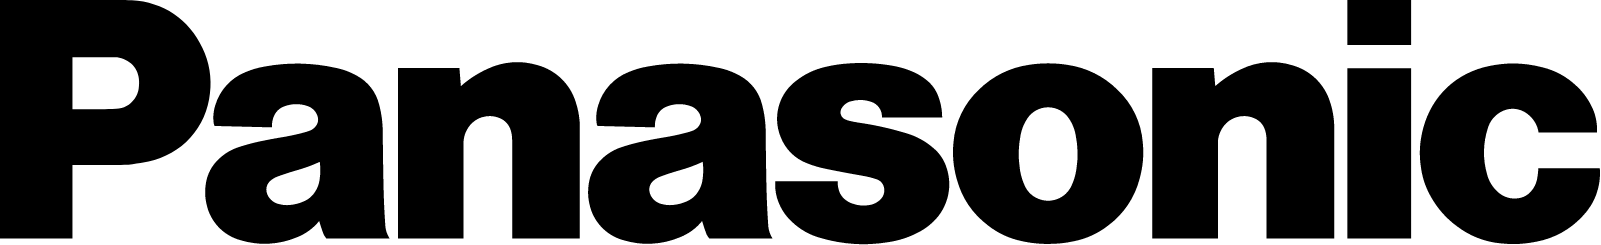 Panasonic logo large (transparent PNG)